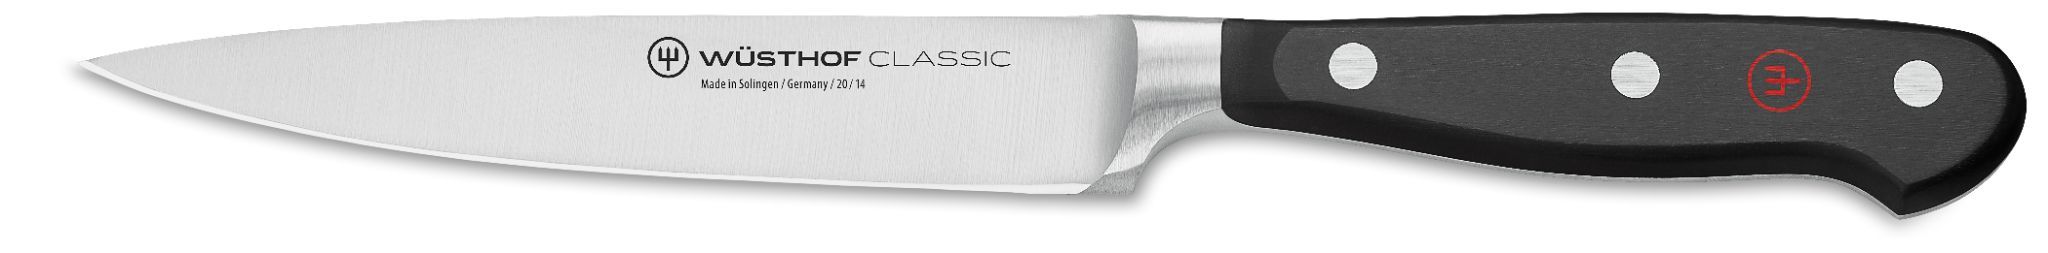 wusthof classic utility knife 14cm